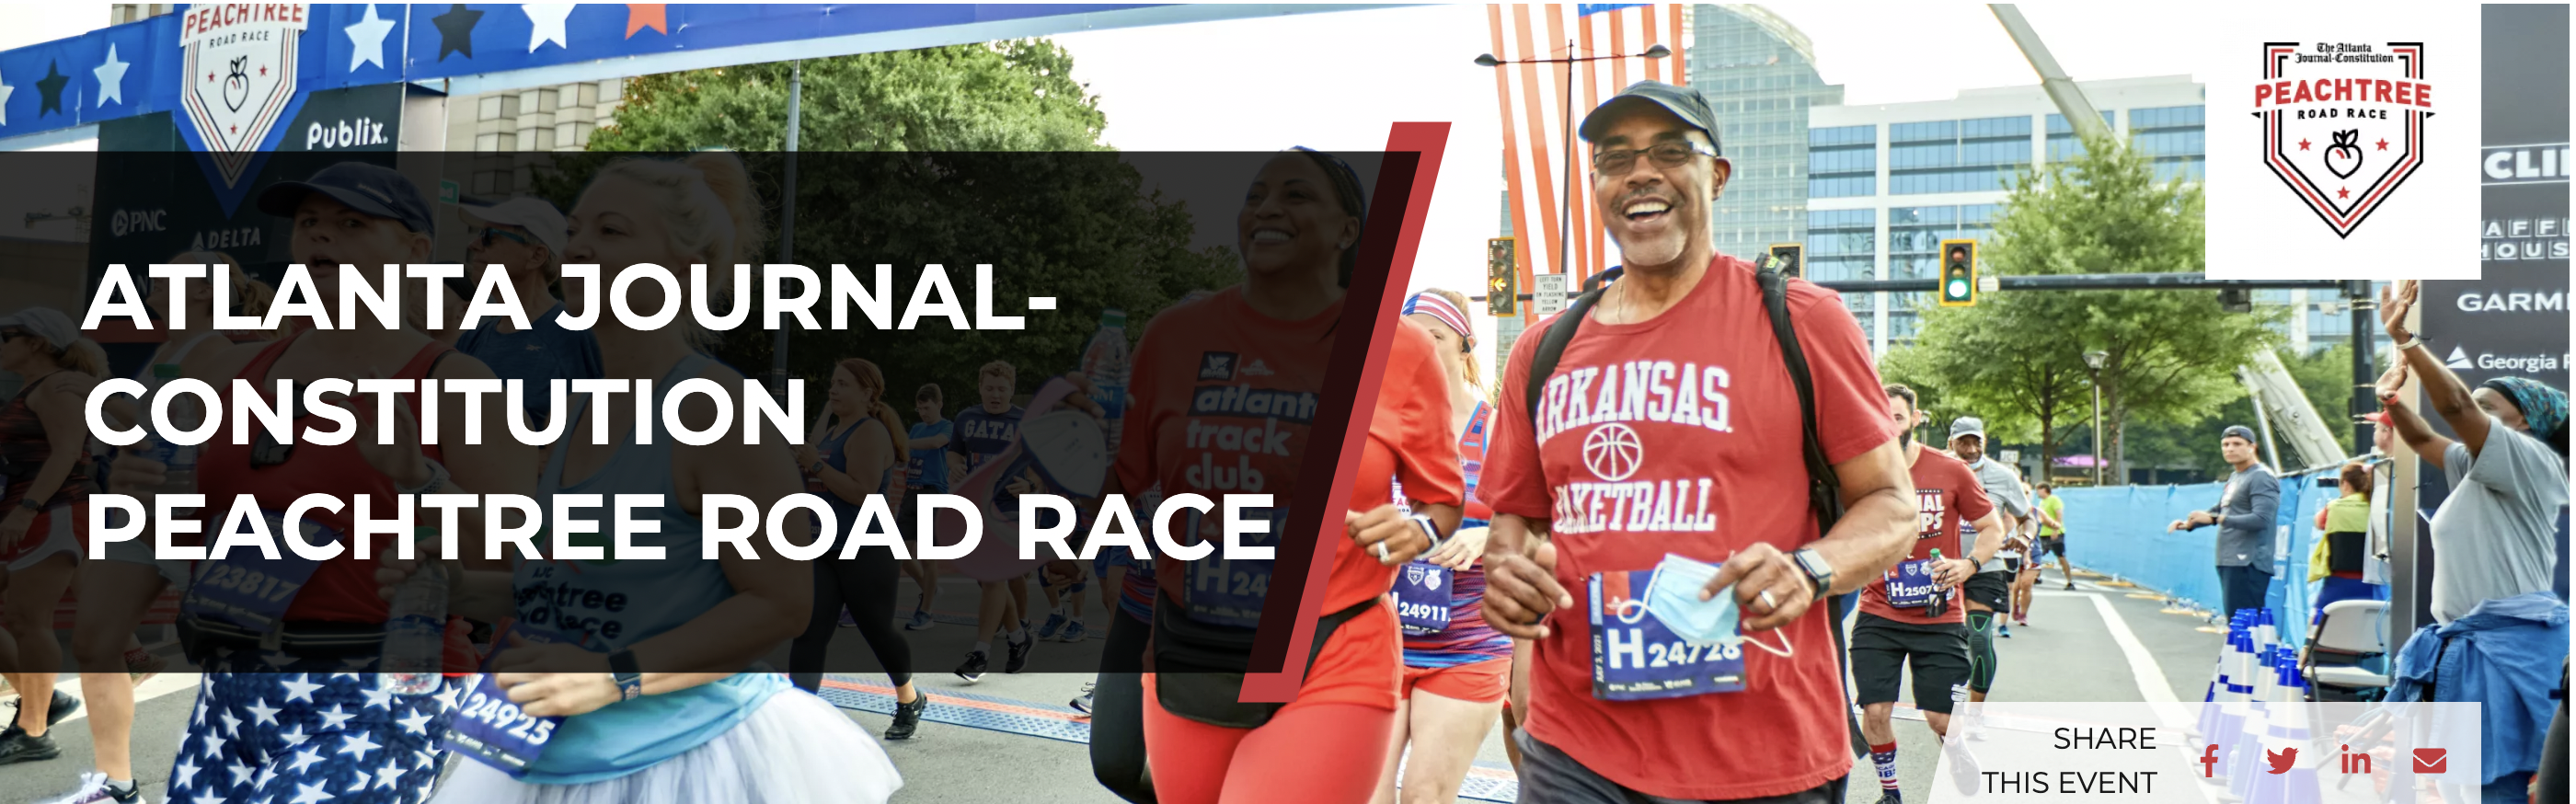 Atlanta Journal-Constitution Peachtree Road Race